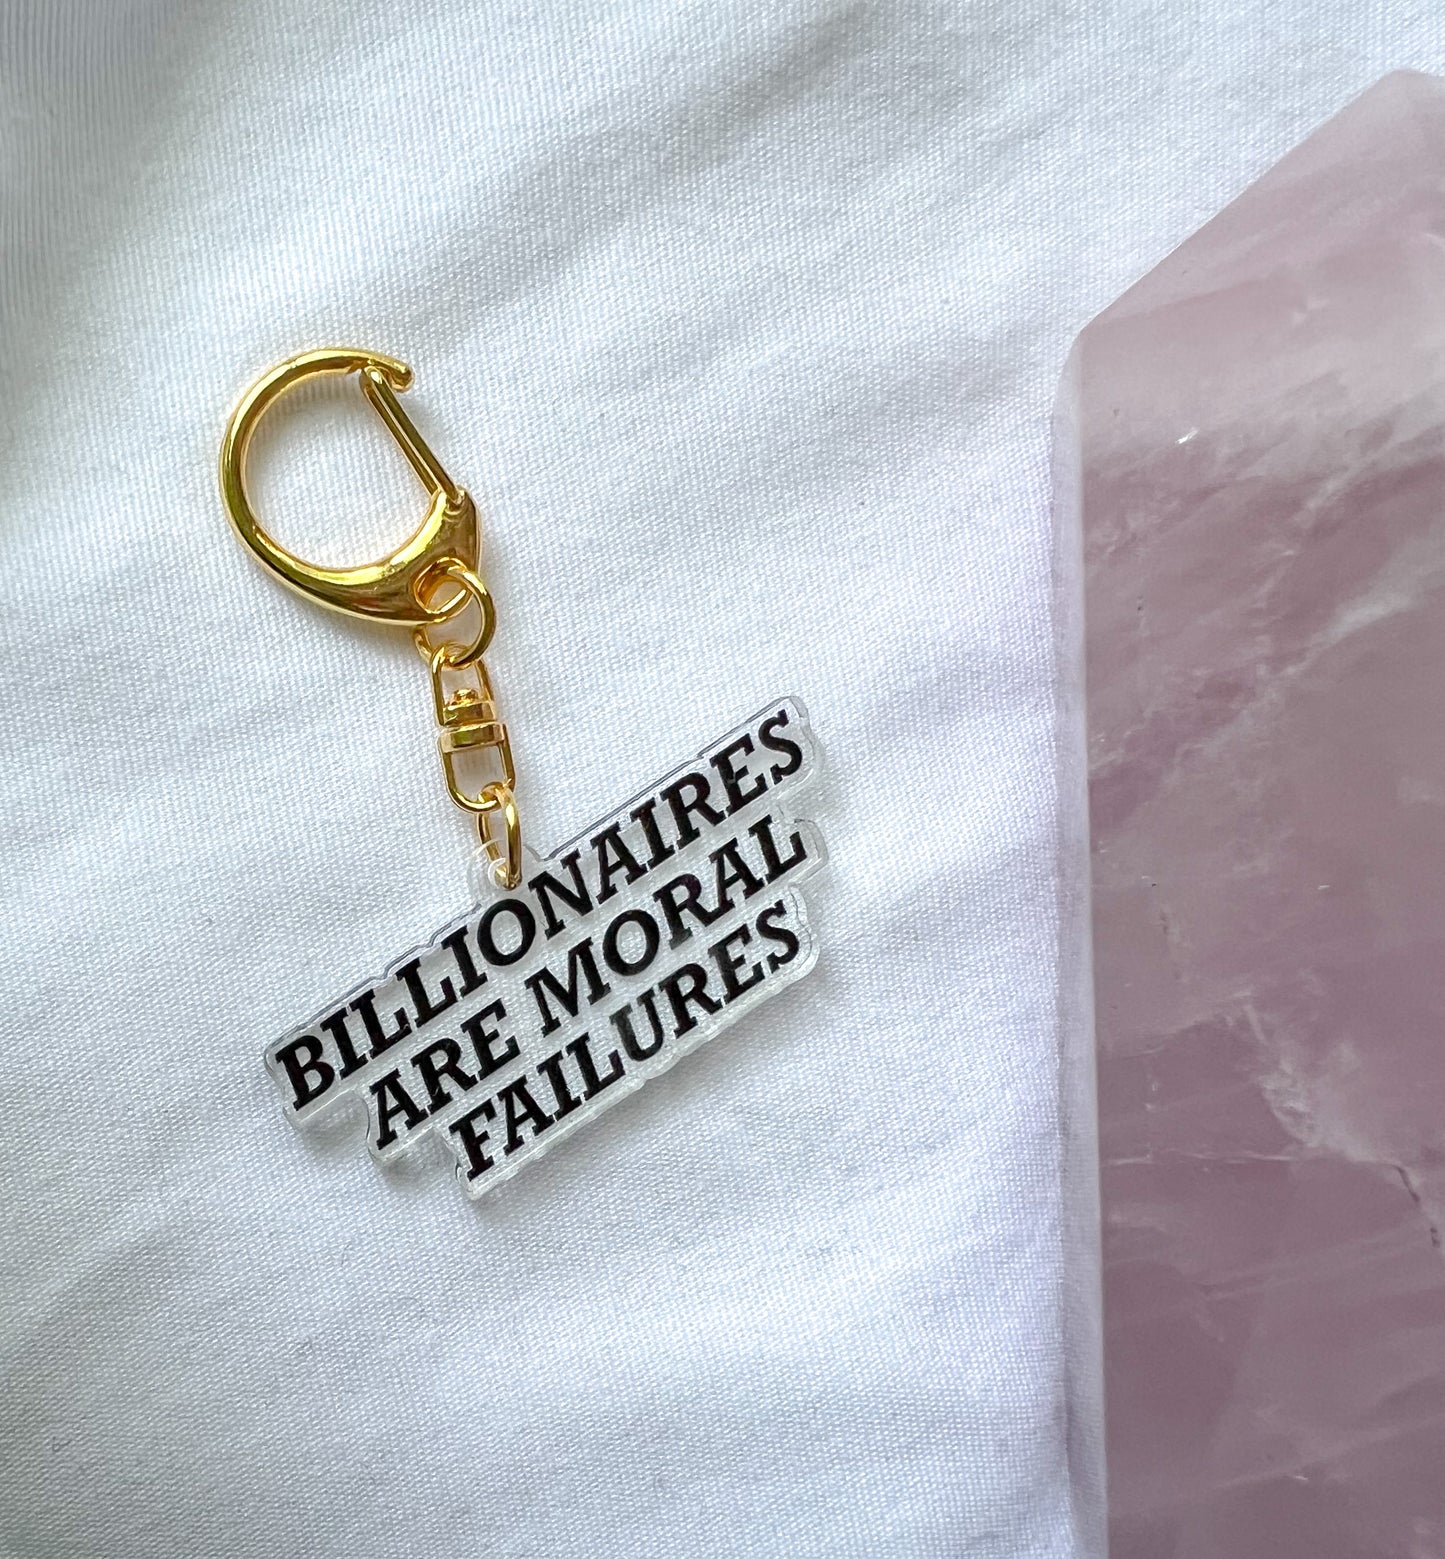 billionaires are moral failures keychains